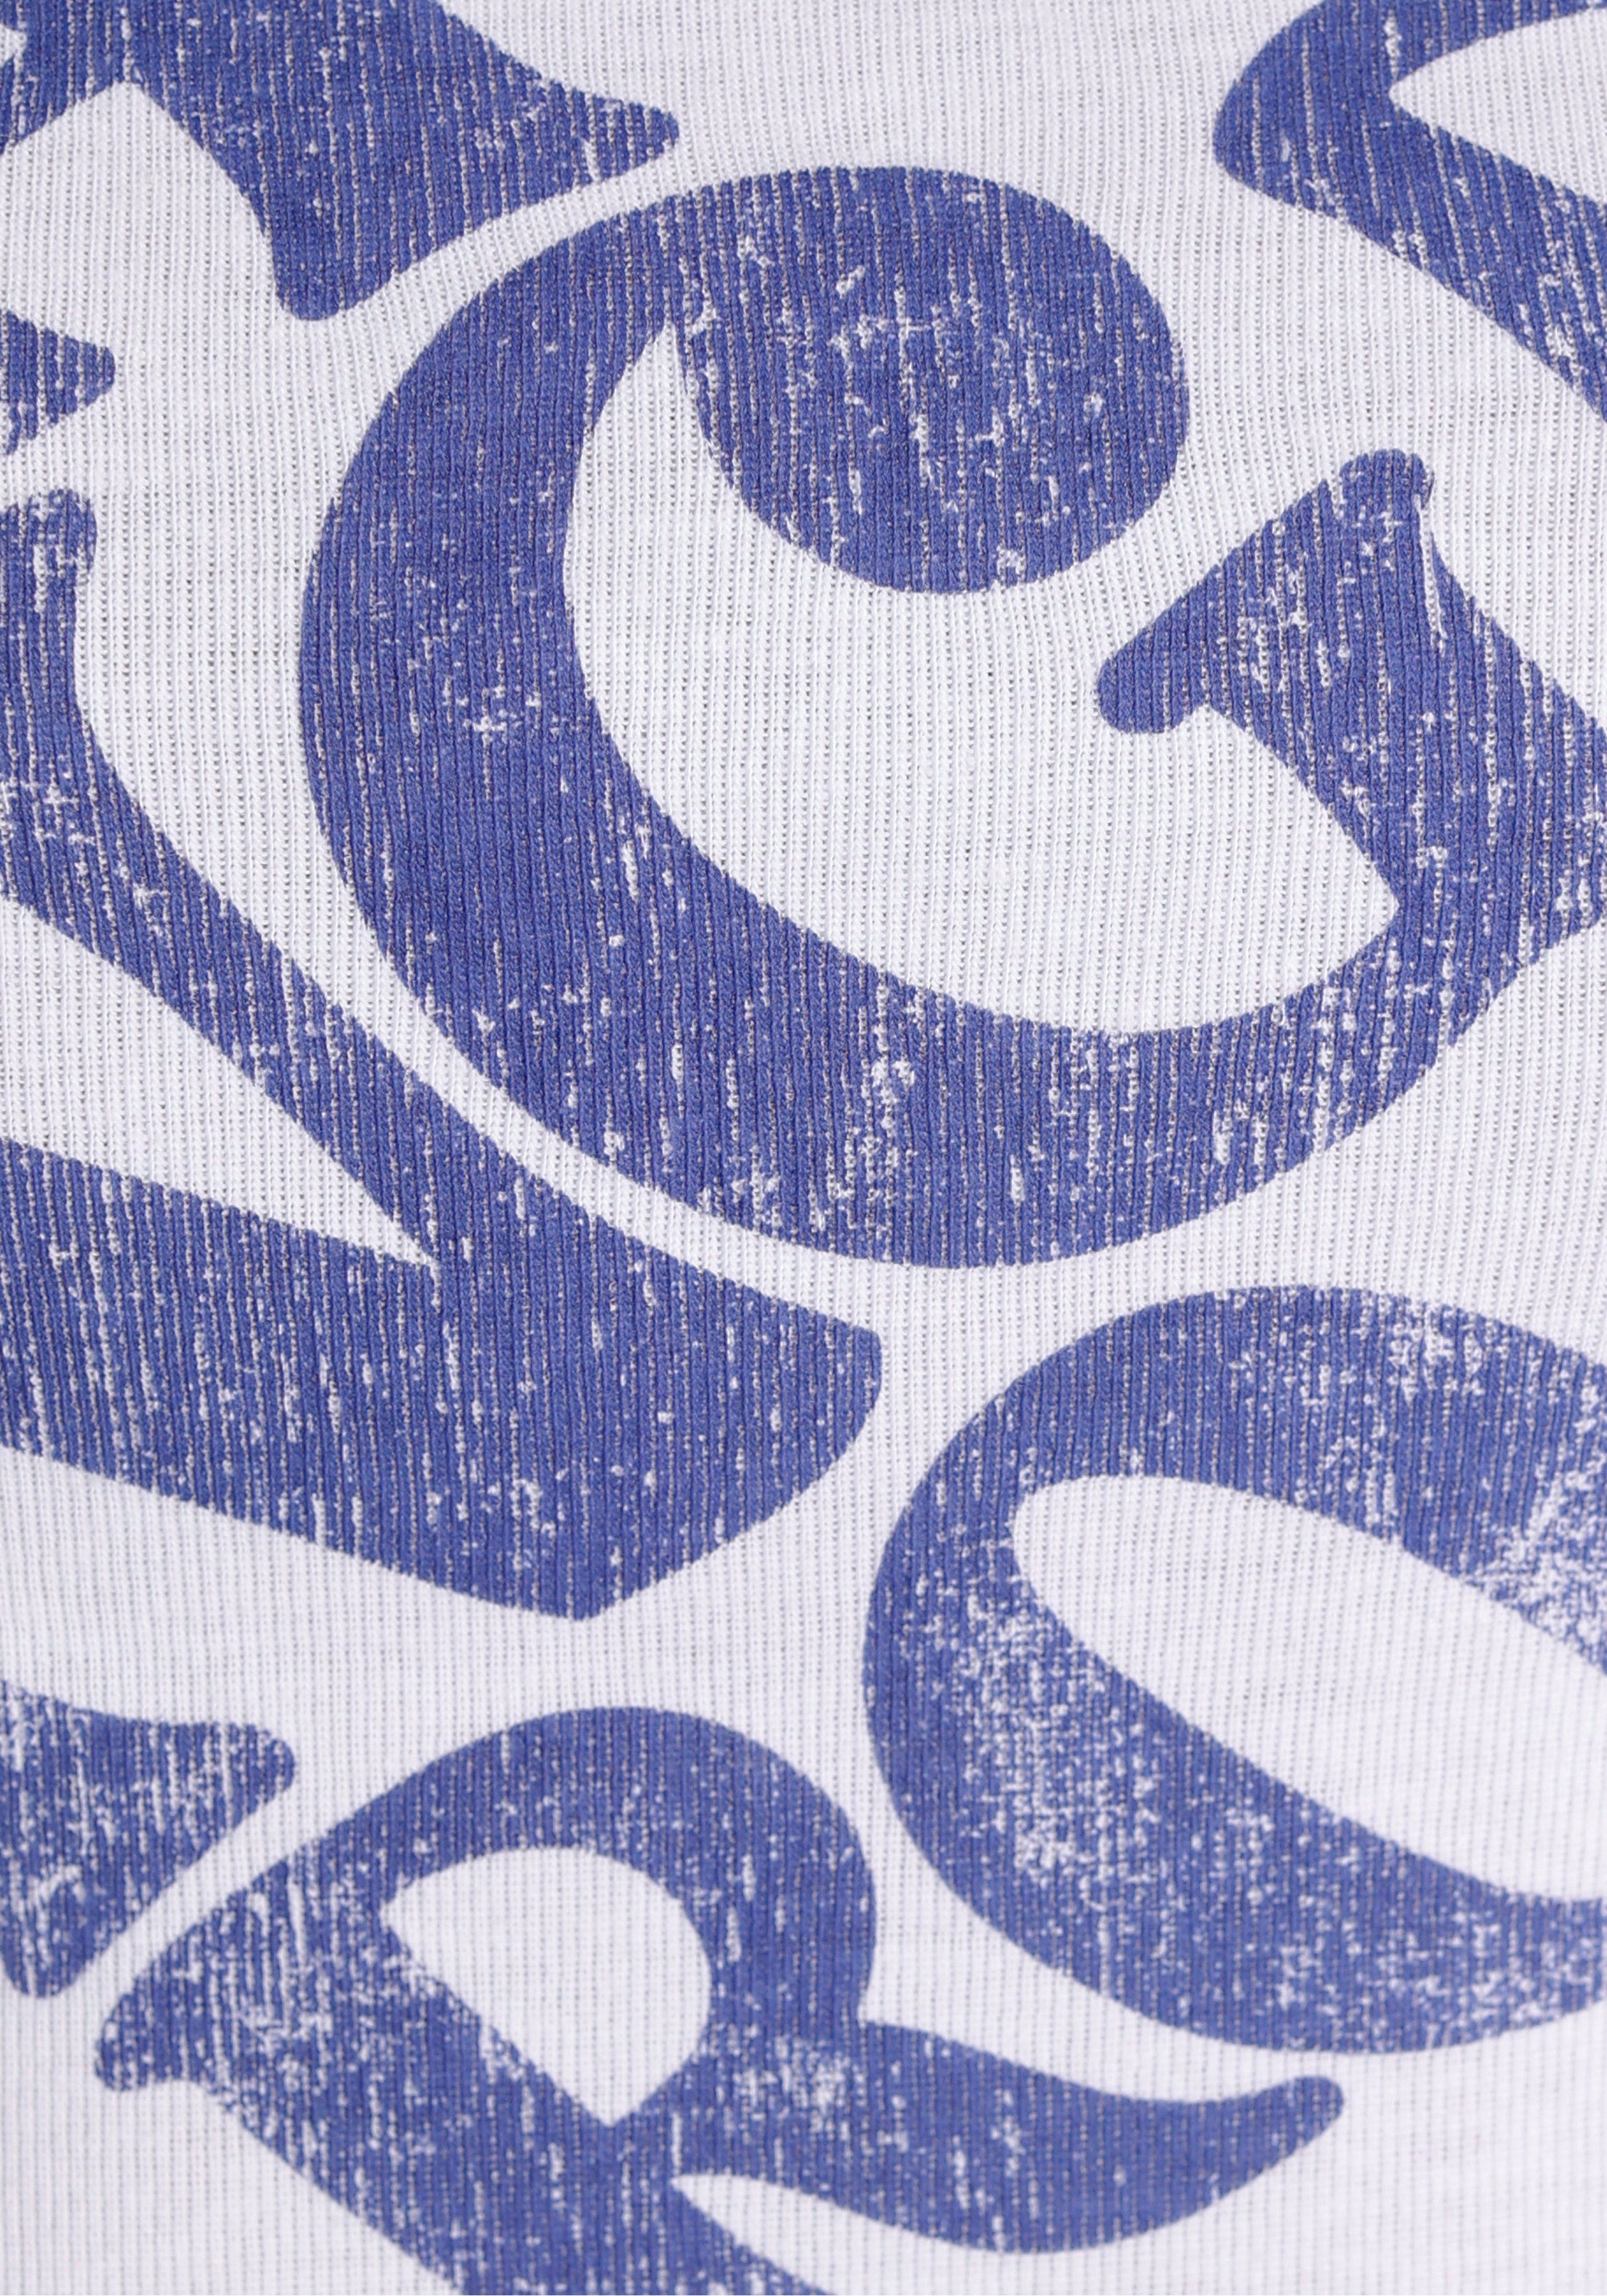 KangaROOS Print-Shirt mit herzlichem Retro-Logoprint NEUE weiß-blau - KOLLEKTION